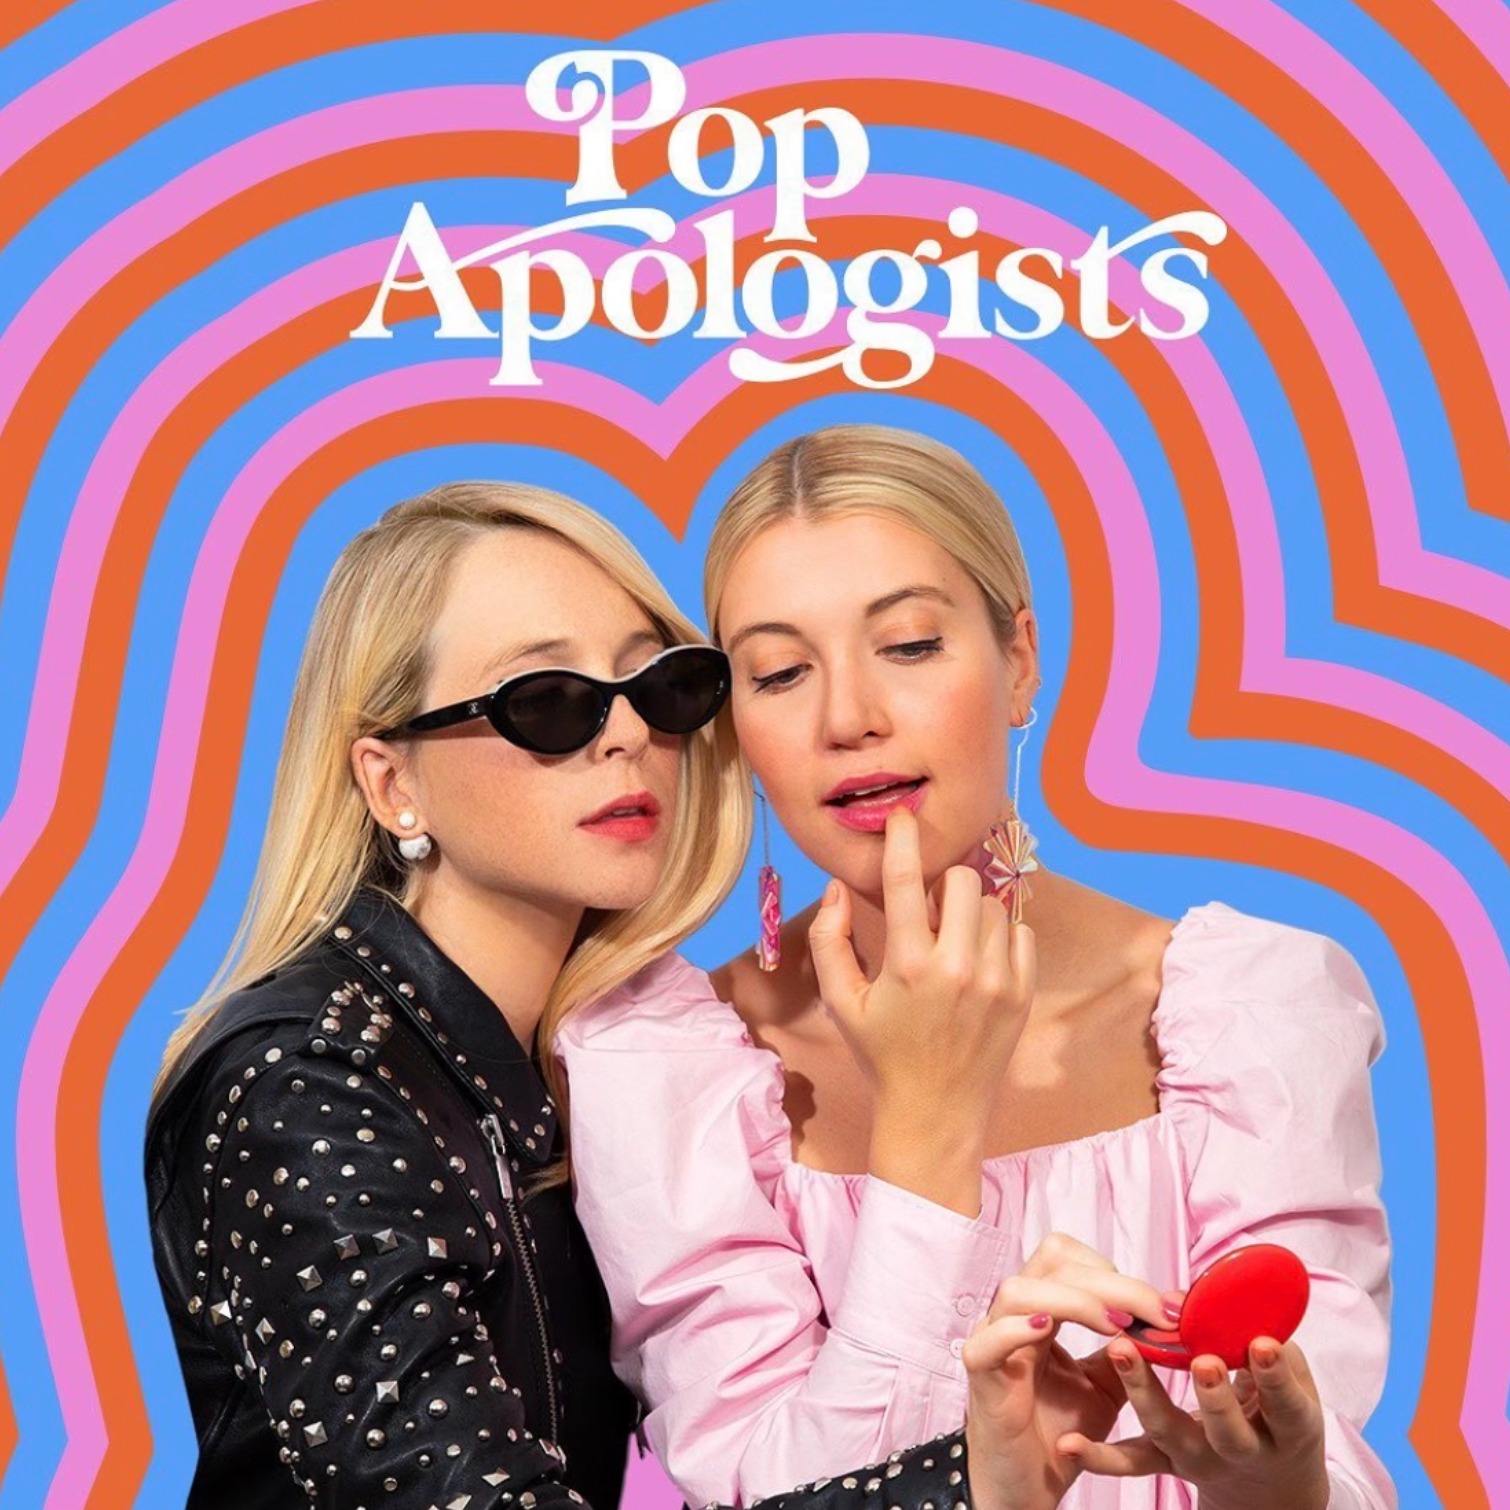 Pop Apologists